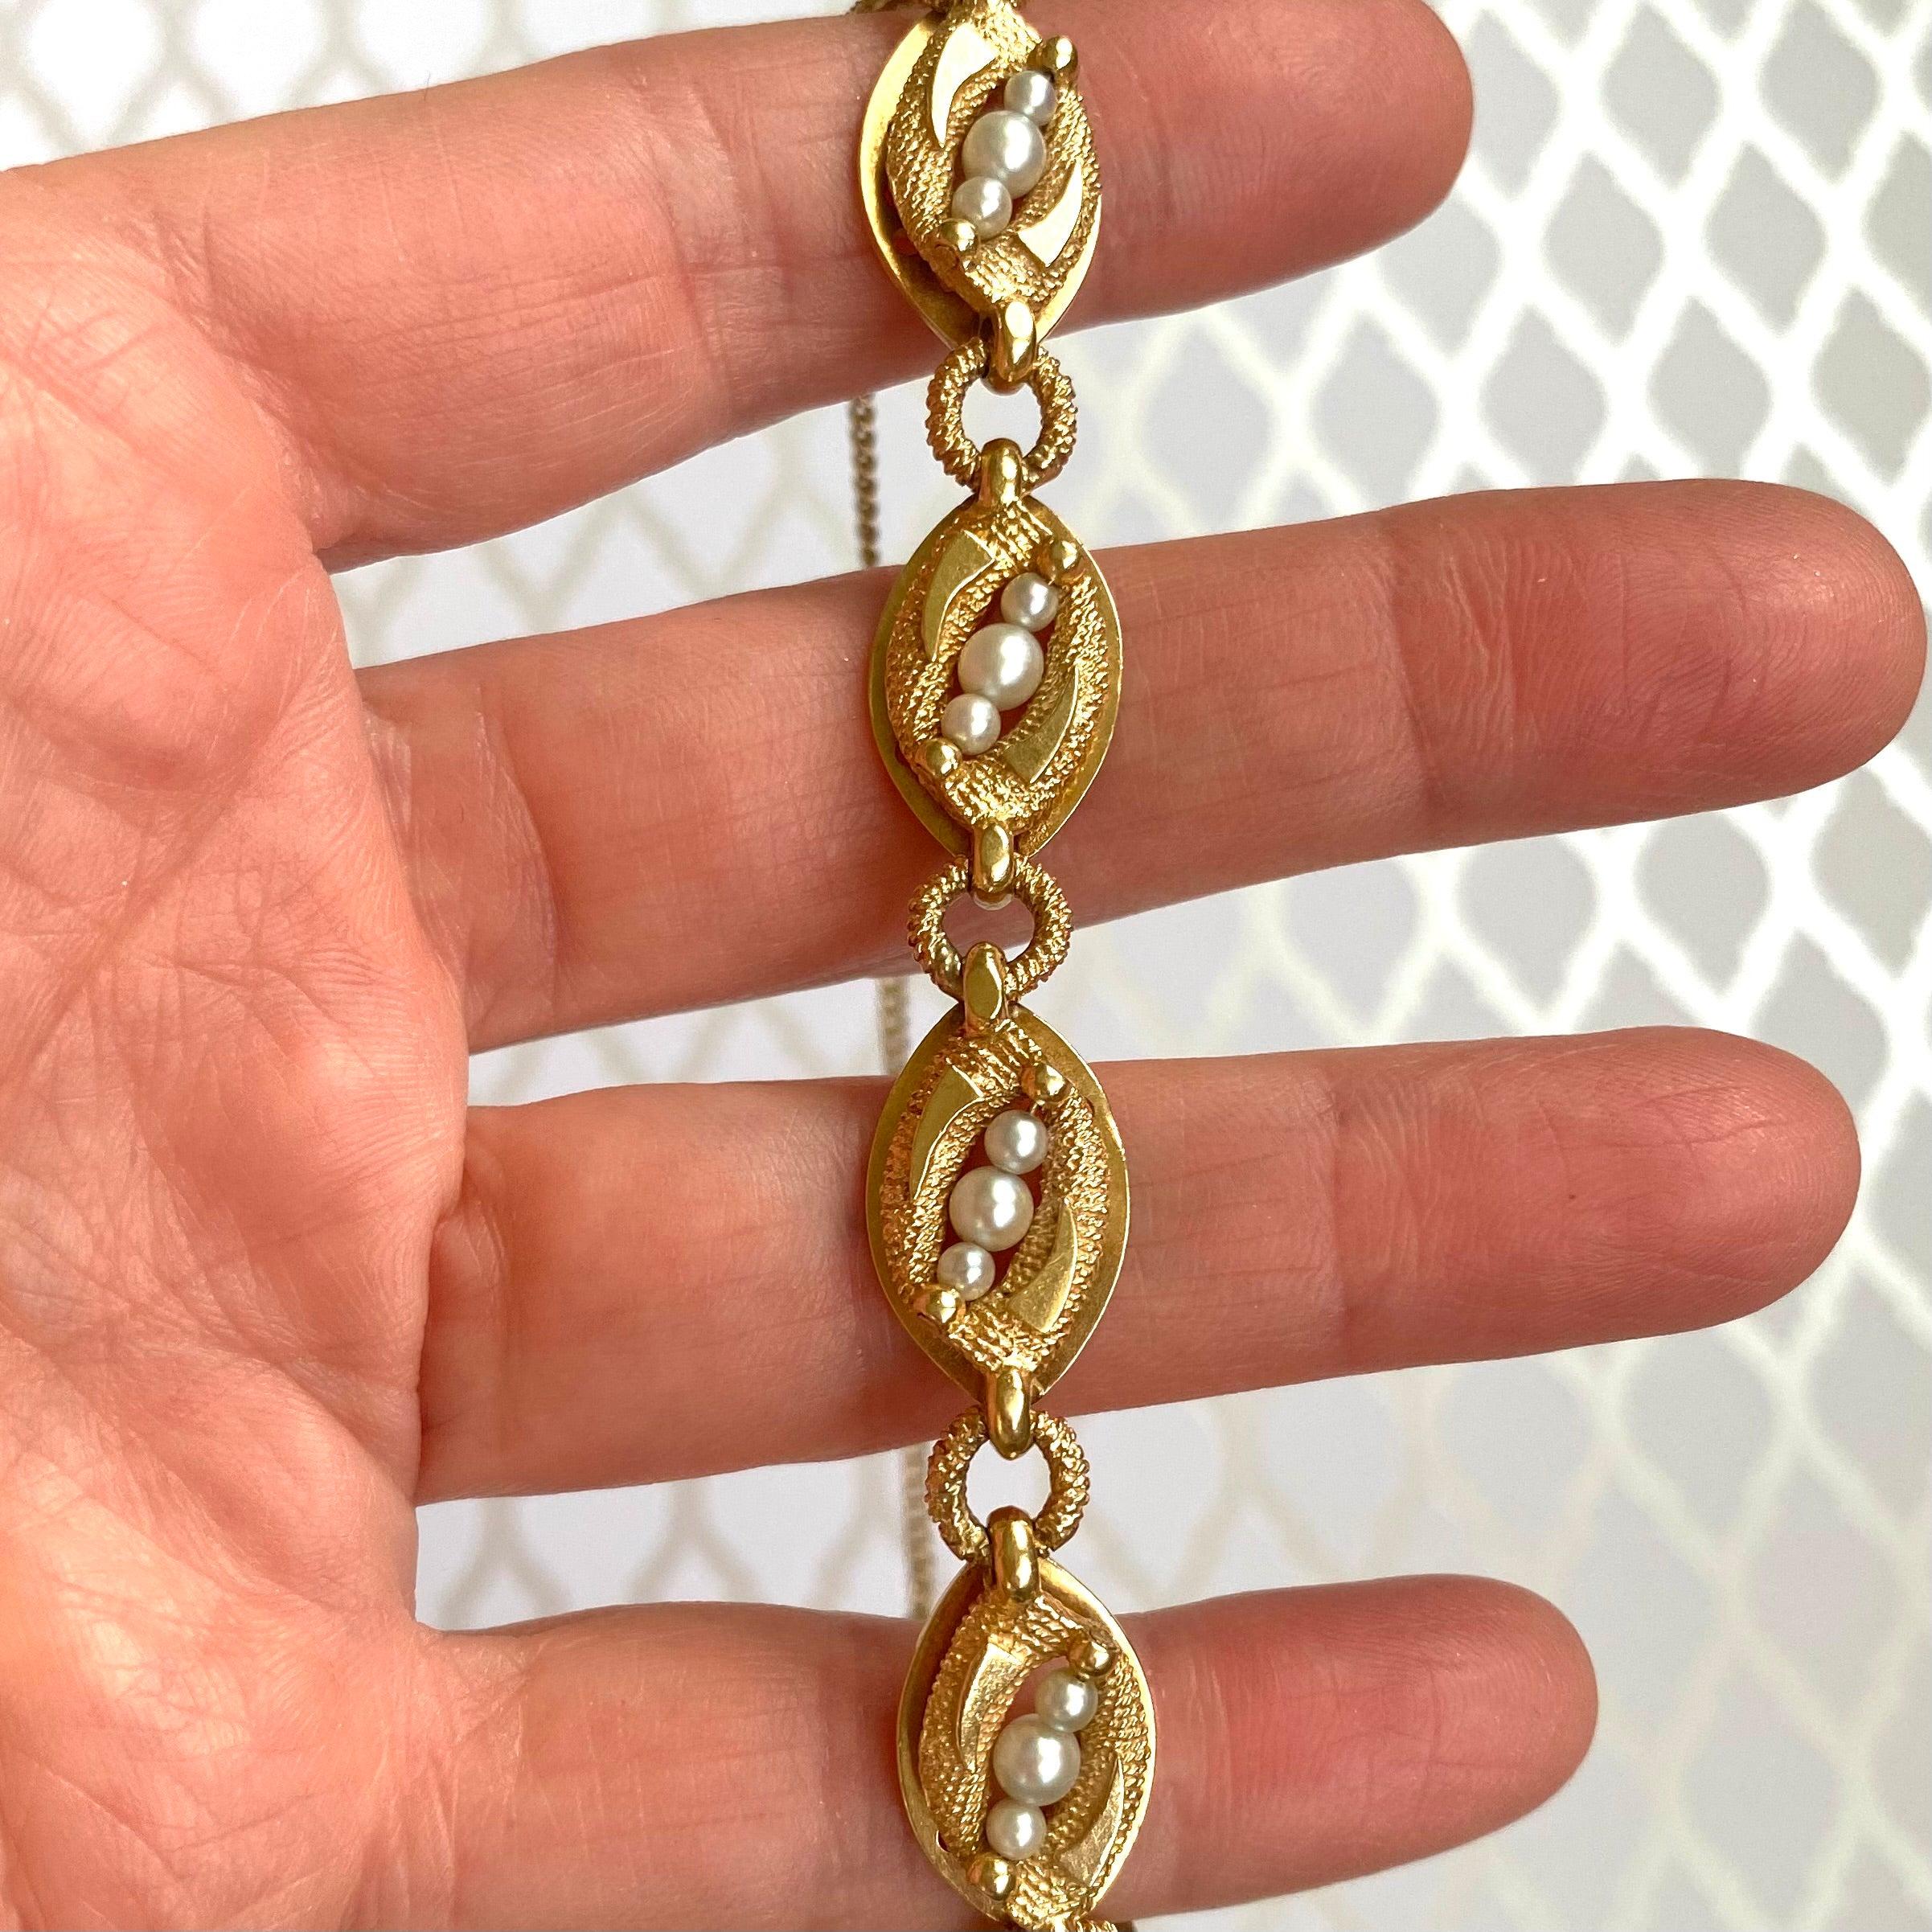 Women's Vintage La Triomphe 14K Yellow Gold and Pearl Bracelet For Sale